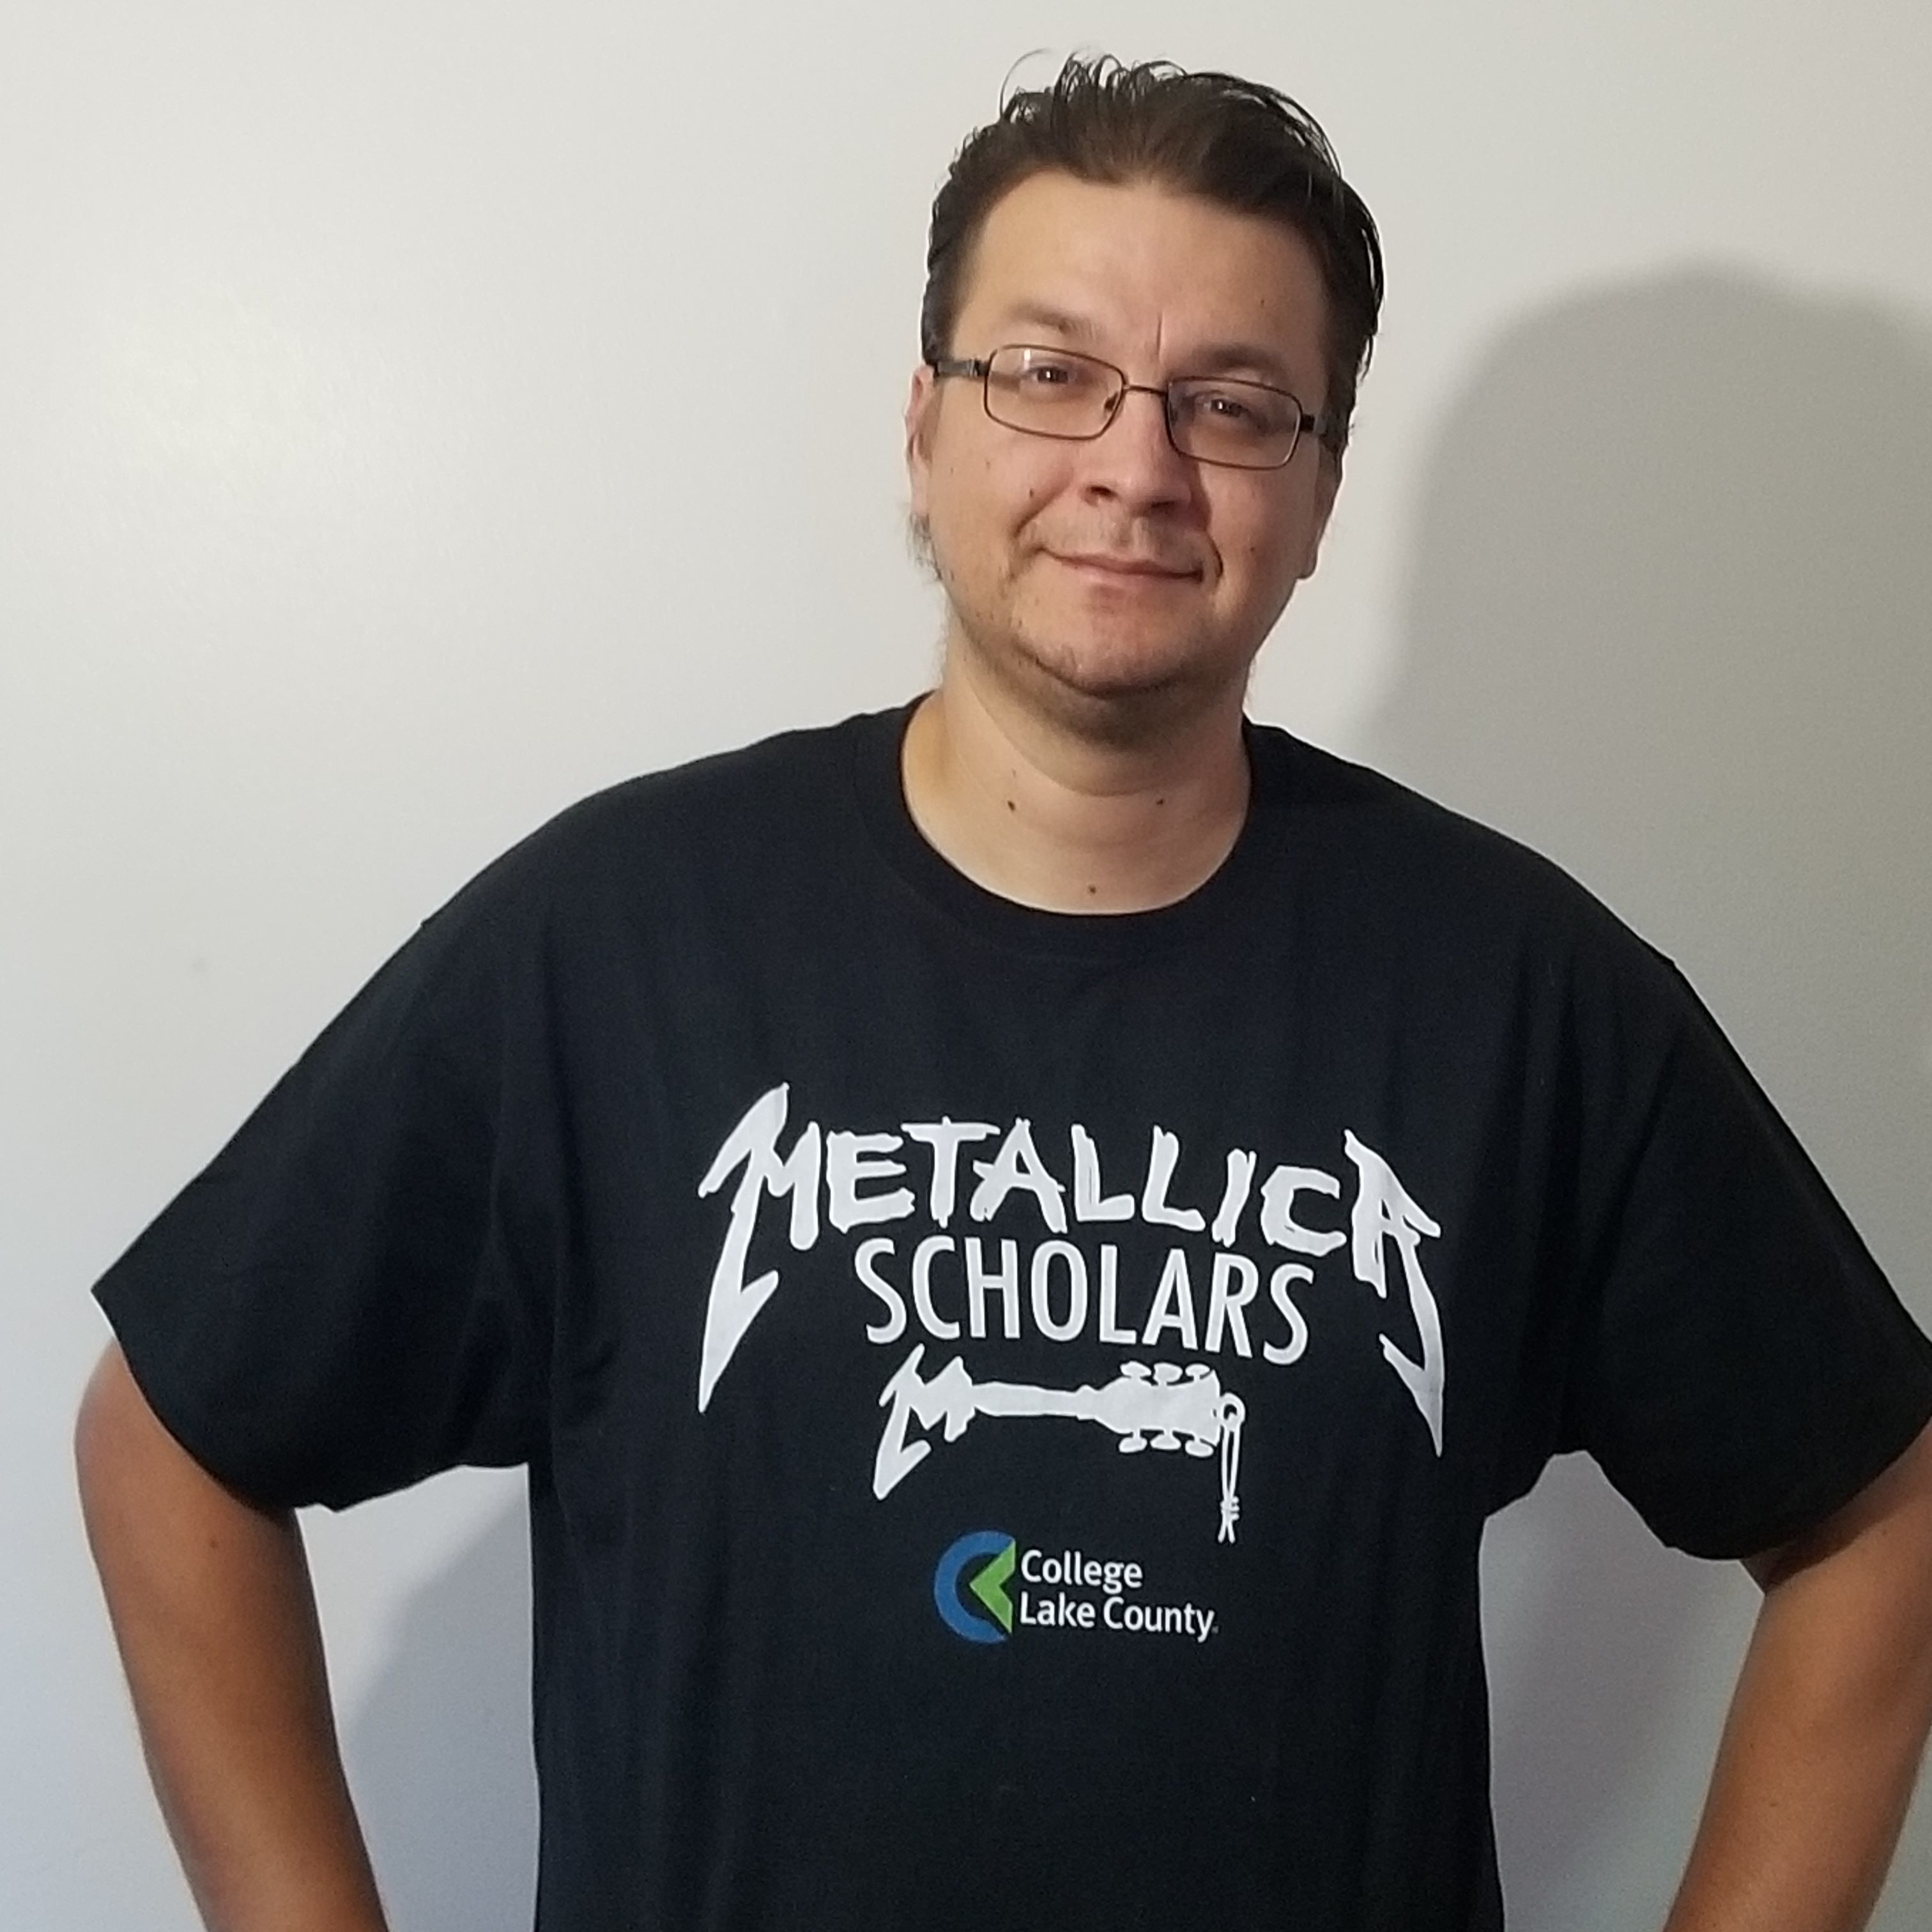 Metallica Scholars Spotlight: David